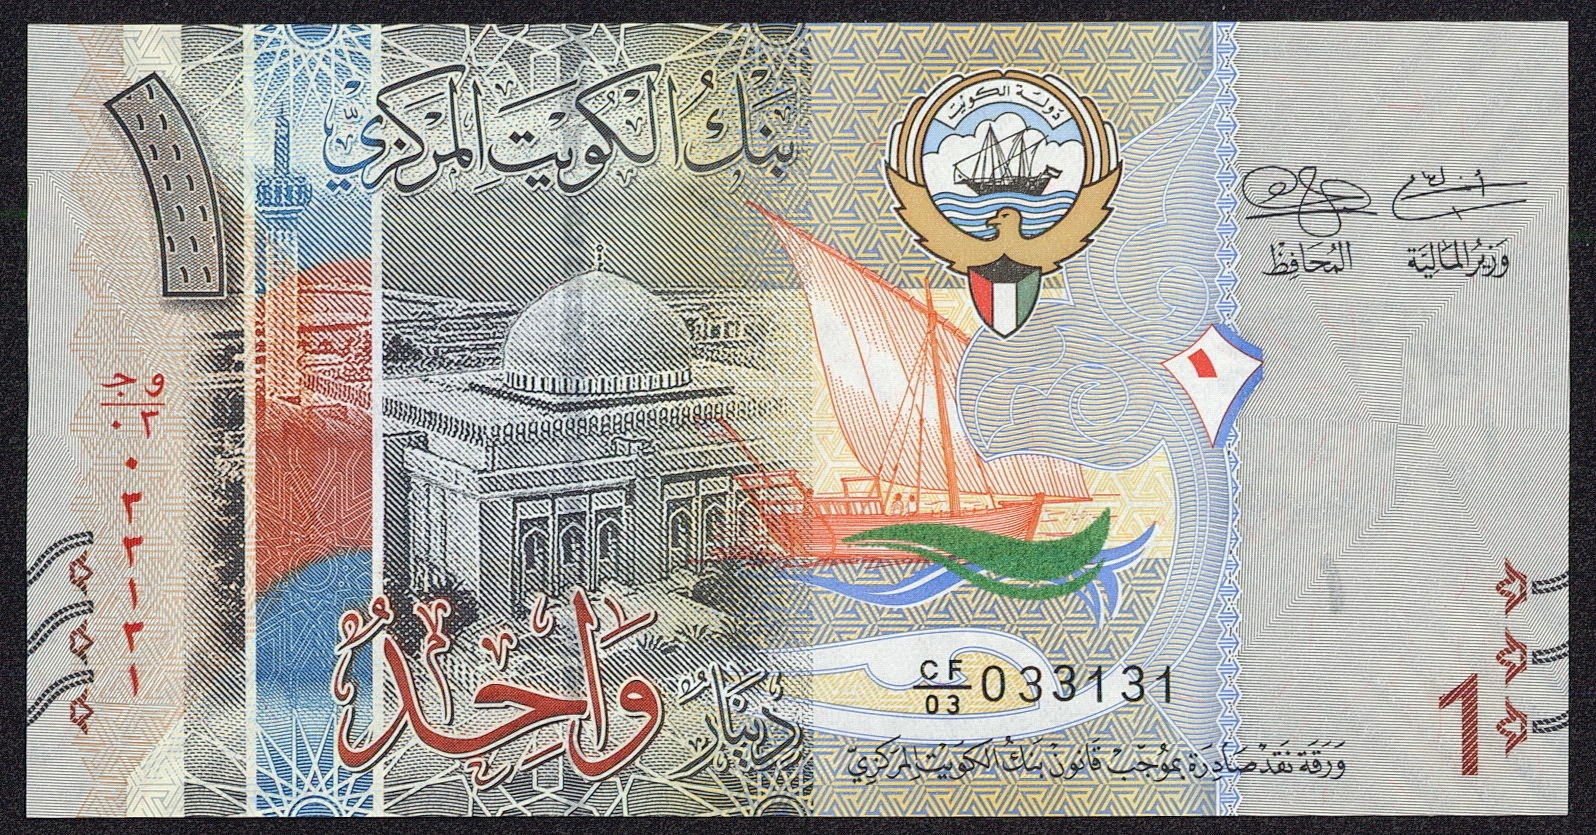 Kuwait New Banknotes 1 Dinar bank note 2014